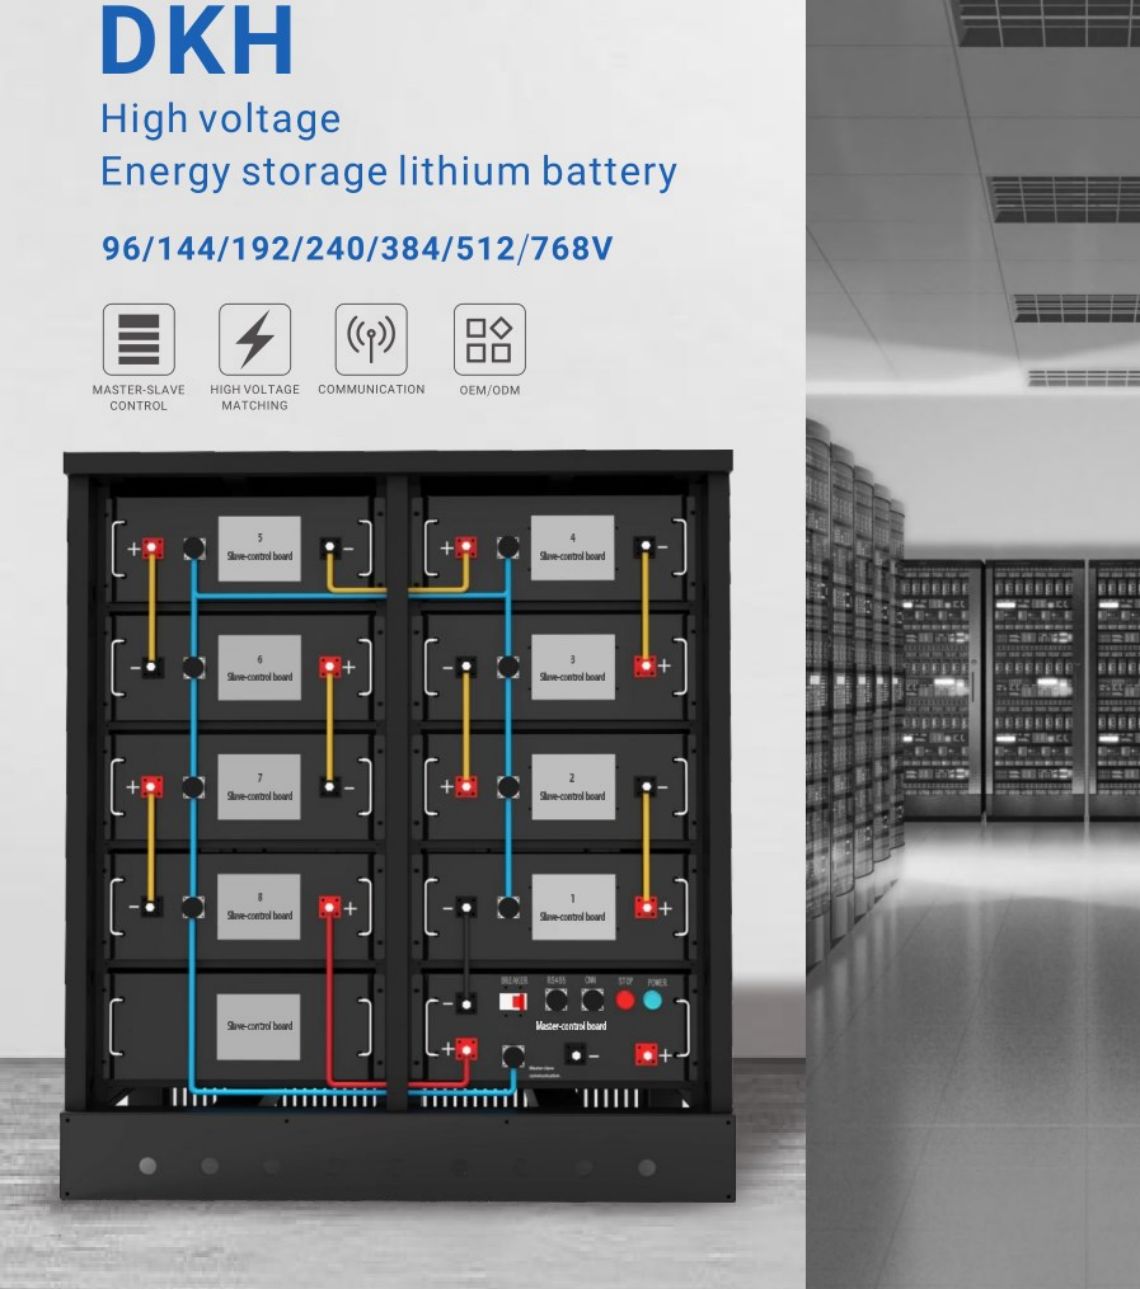 High voltage energy storage lithium battery system